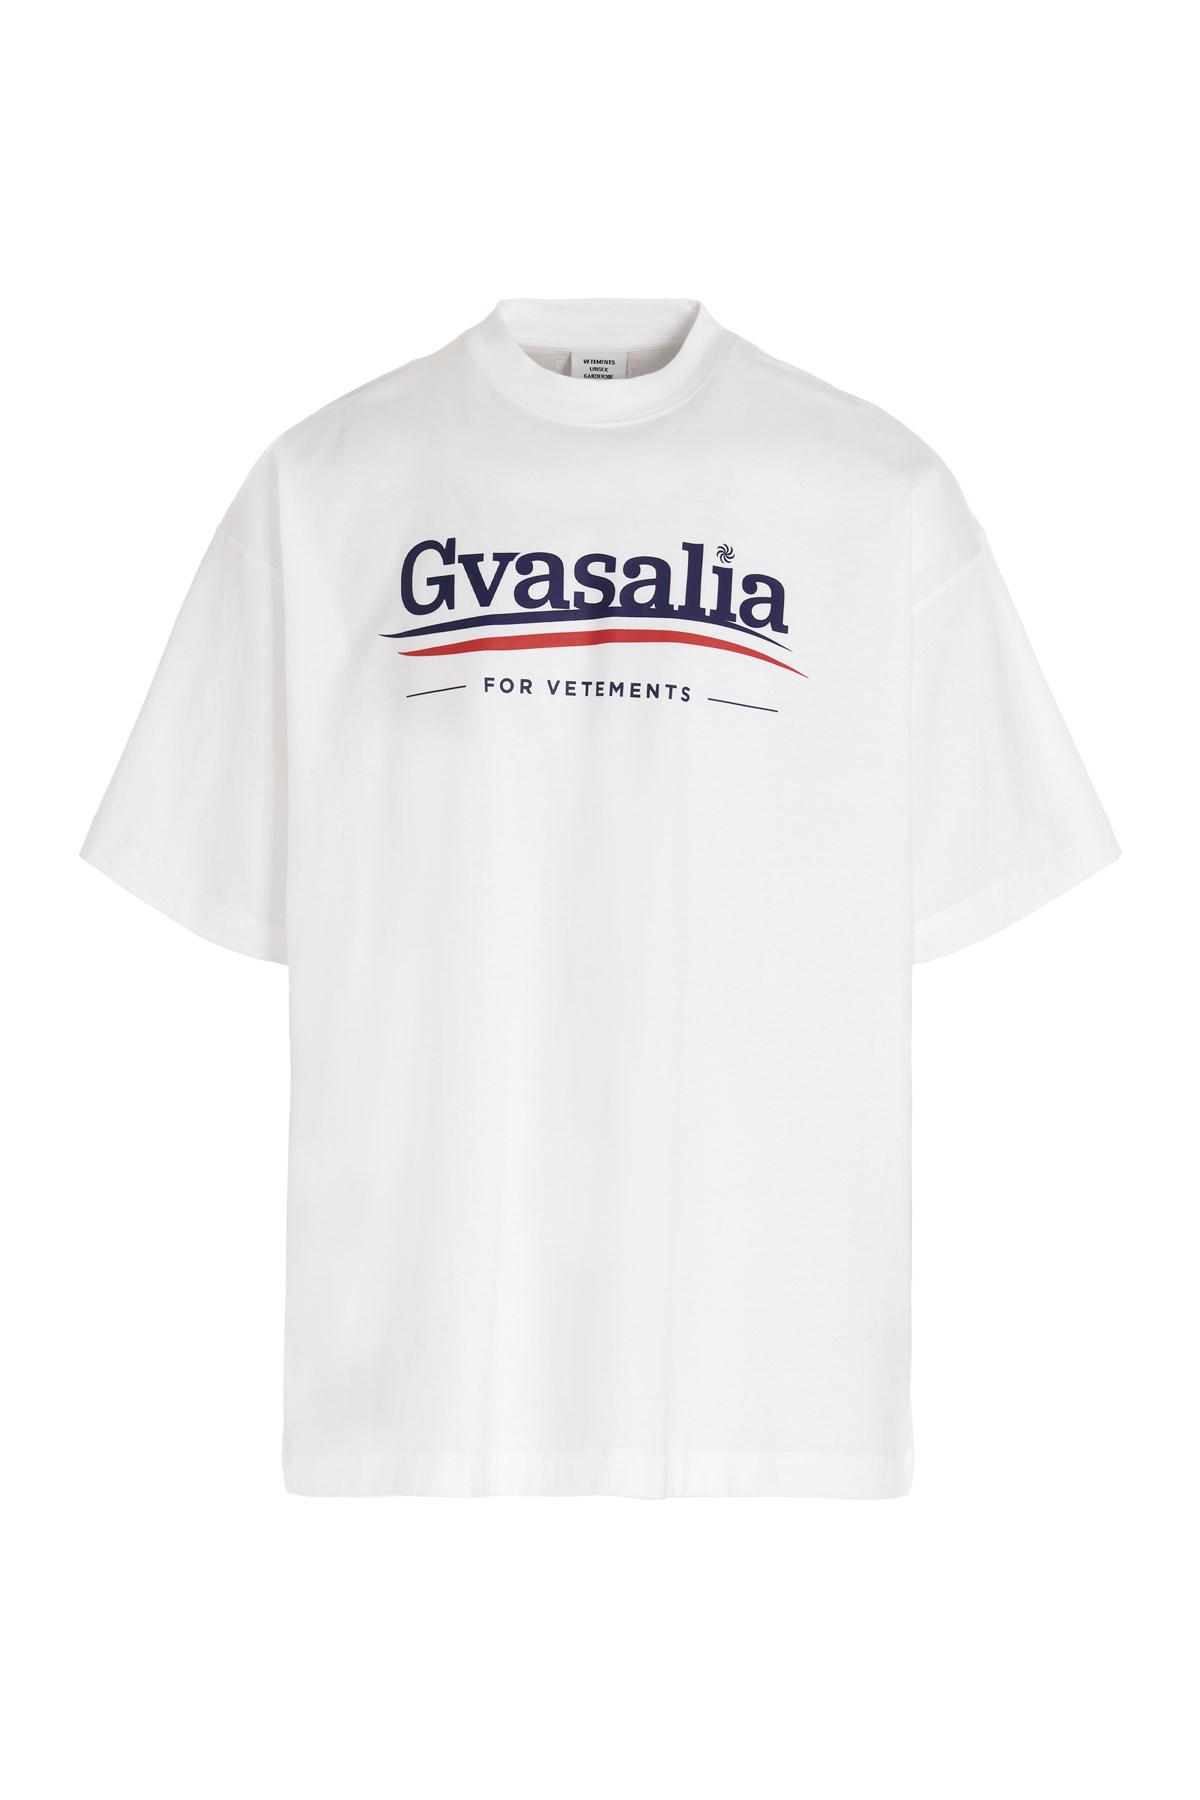 VETEMENTS 'Gvasalia For Vetements' T-Shirt